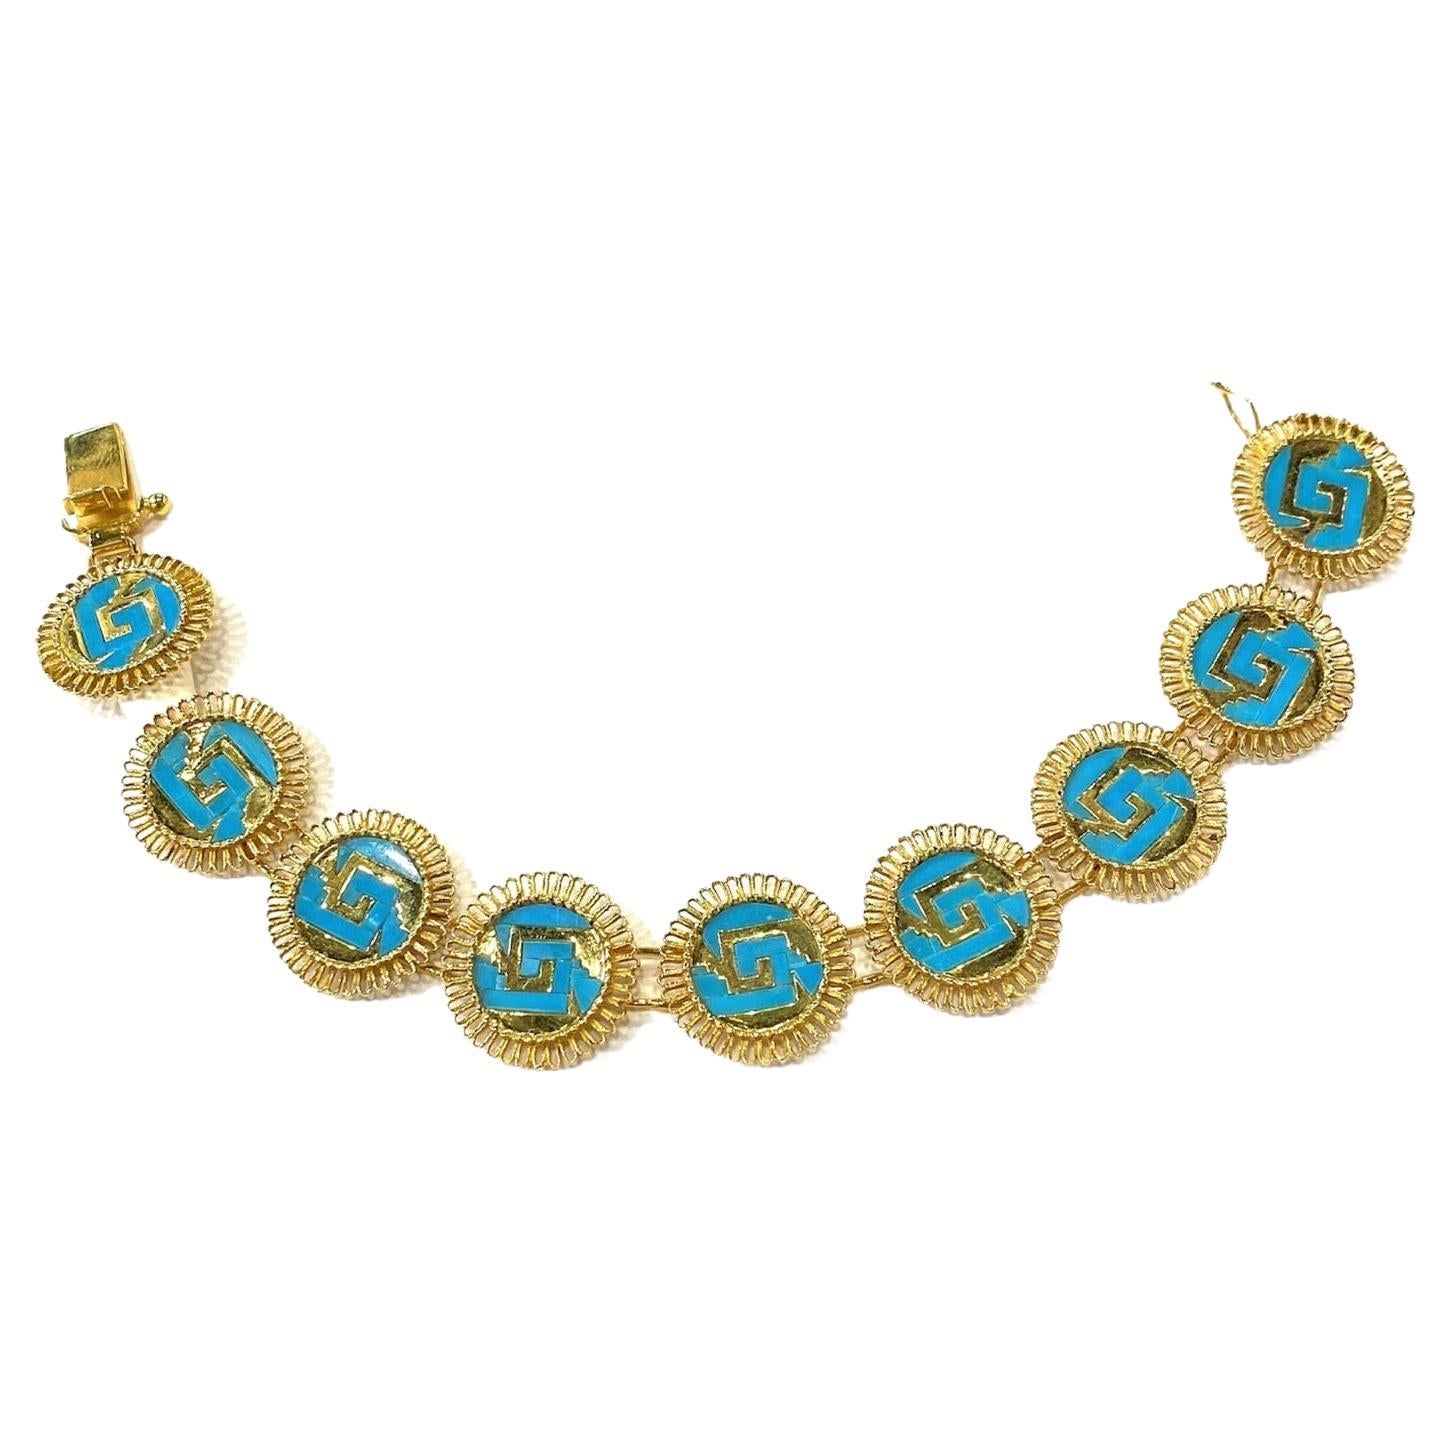 Oro de Monte Alban 14k Gold and Turquoise Bracelet.